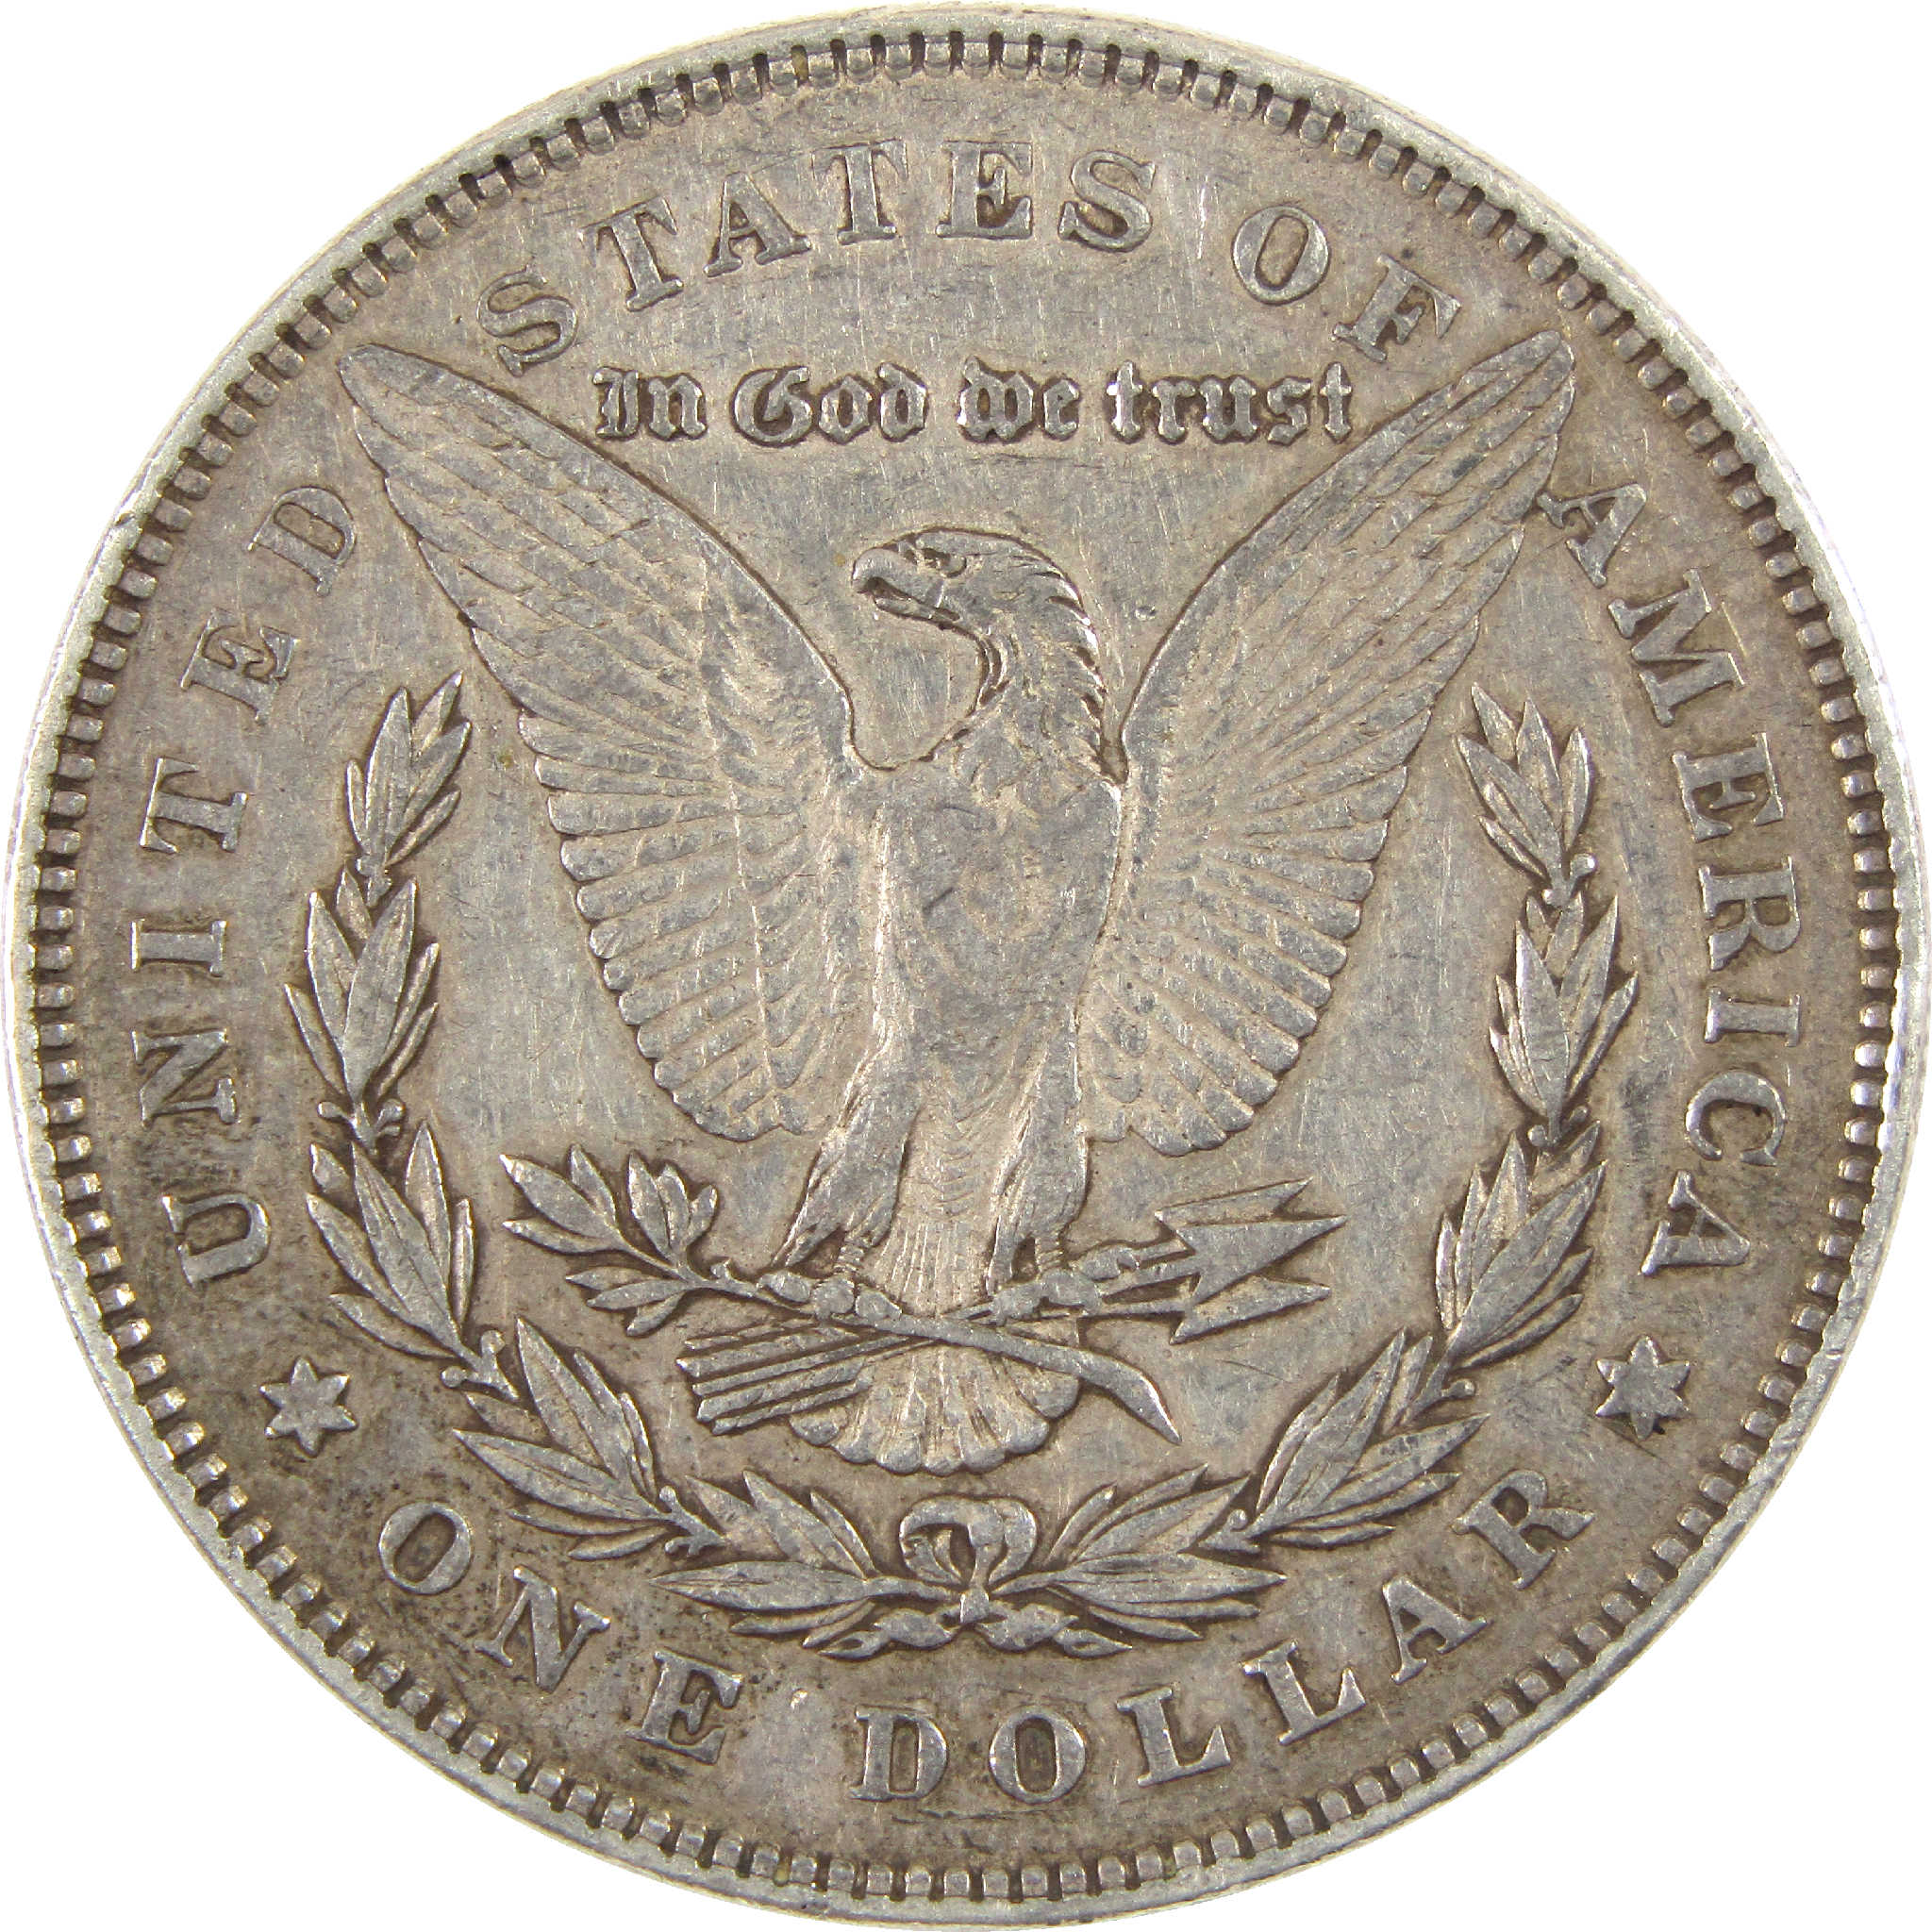 1878 7TF Rev 78 Morgan Dollar VF Very Fine Silver $1 Coin SKU:I11528 - Morgan coin - Morgan silver dollar - Morgan silver dollar for sale - Profile Coins &amp; Collectibles